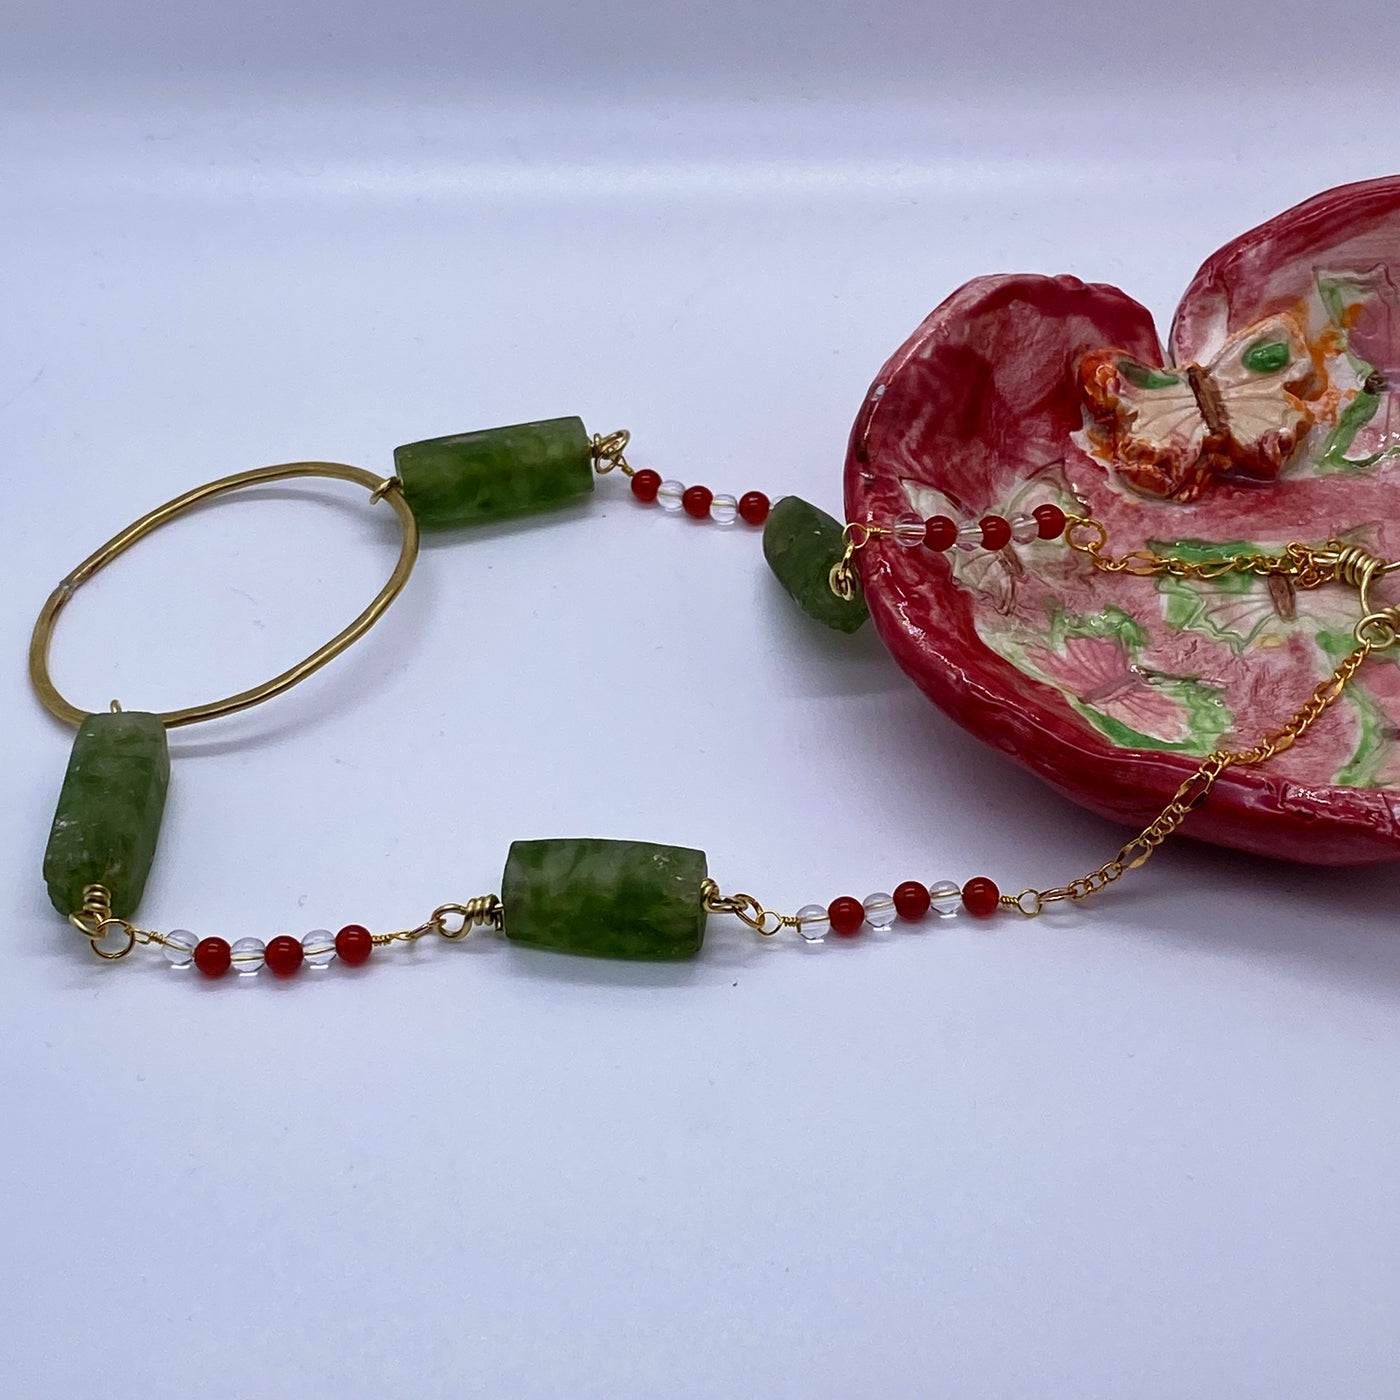 Green glass, carnelian and quarz necklace with brass